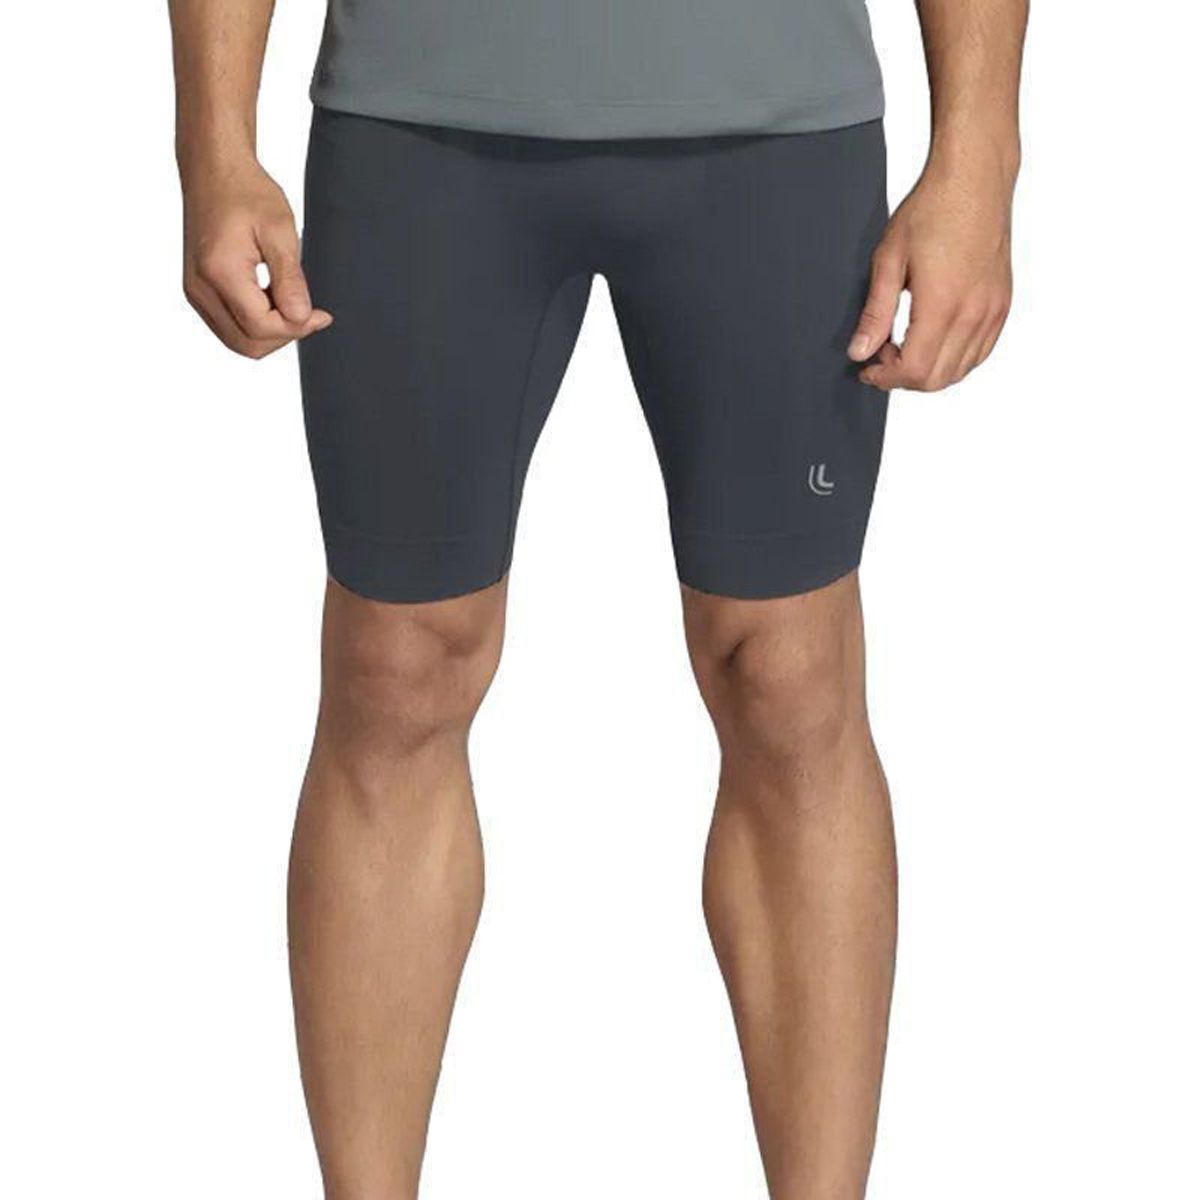 Shorts Masculino Lupo com Alta Compressão Bermuda Térmica imax  - Bra Lingerie